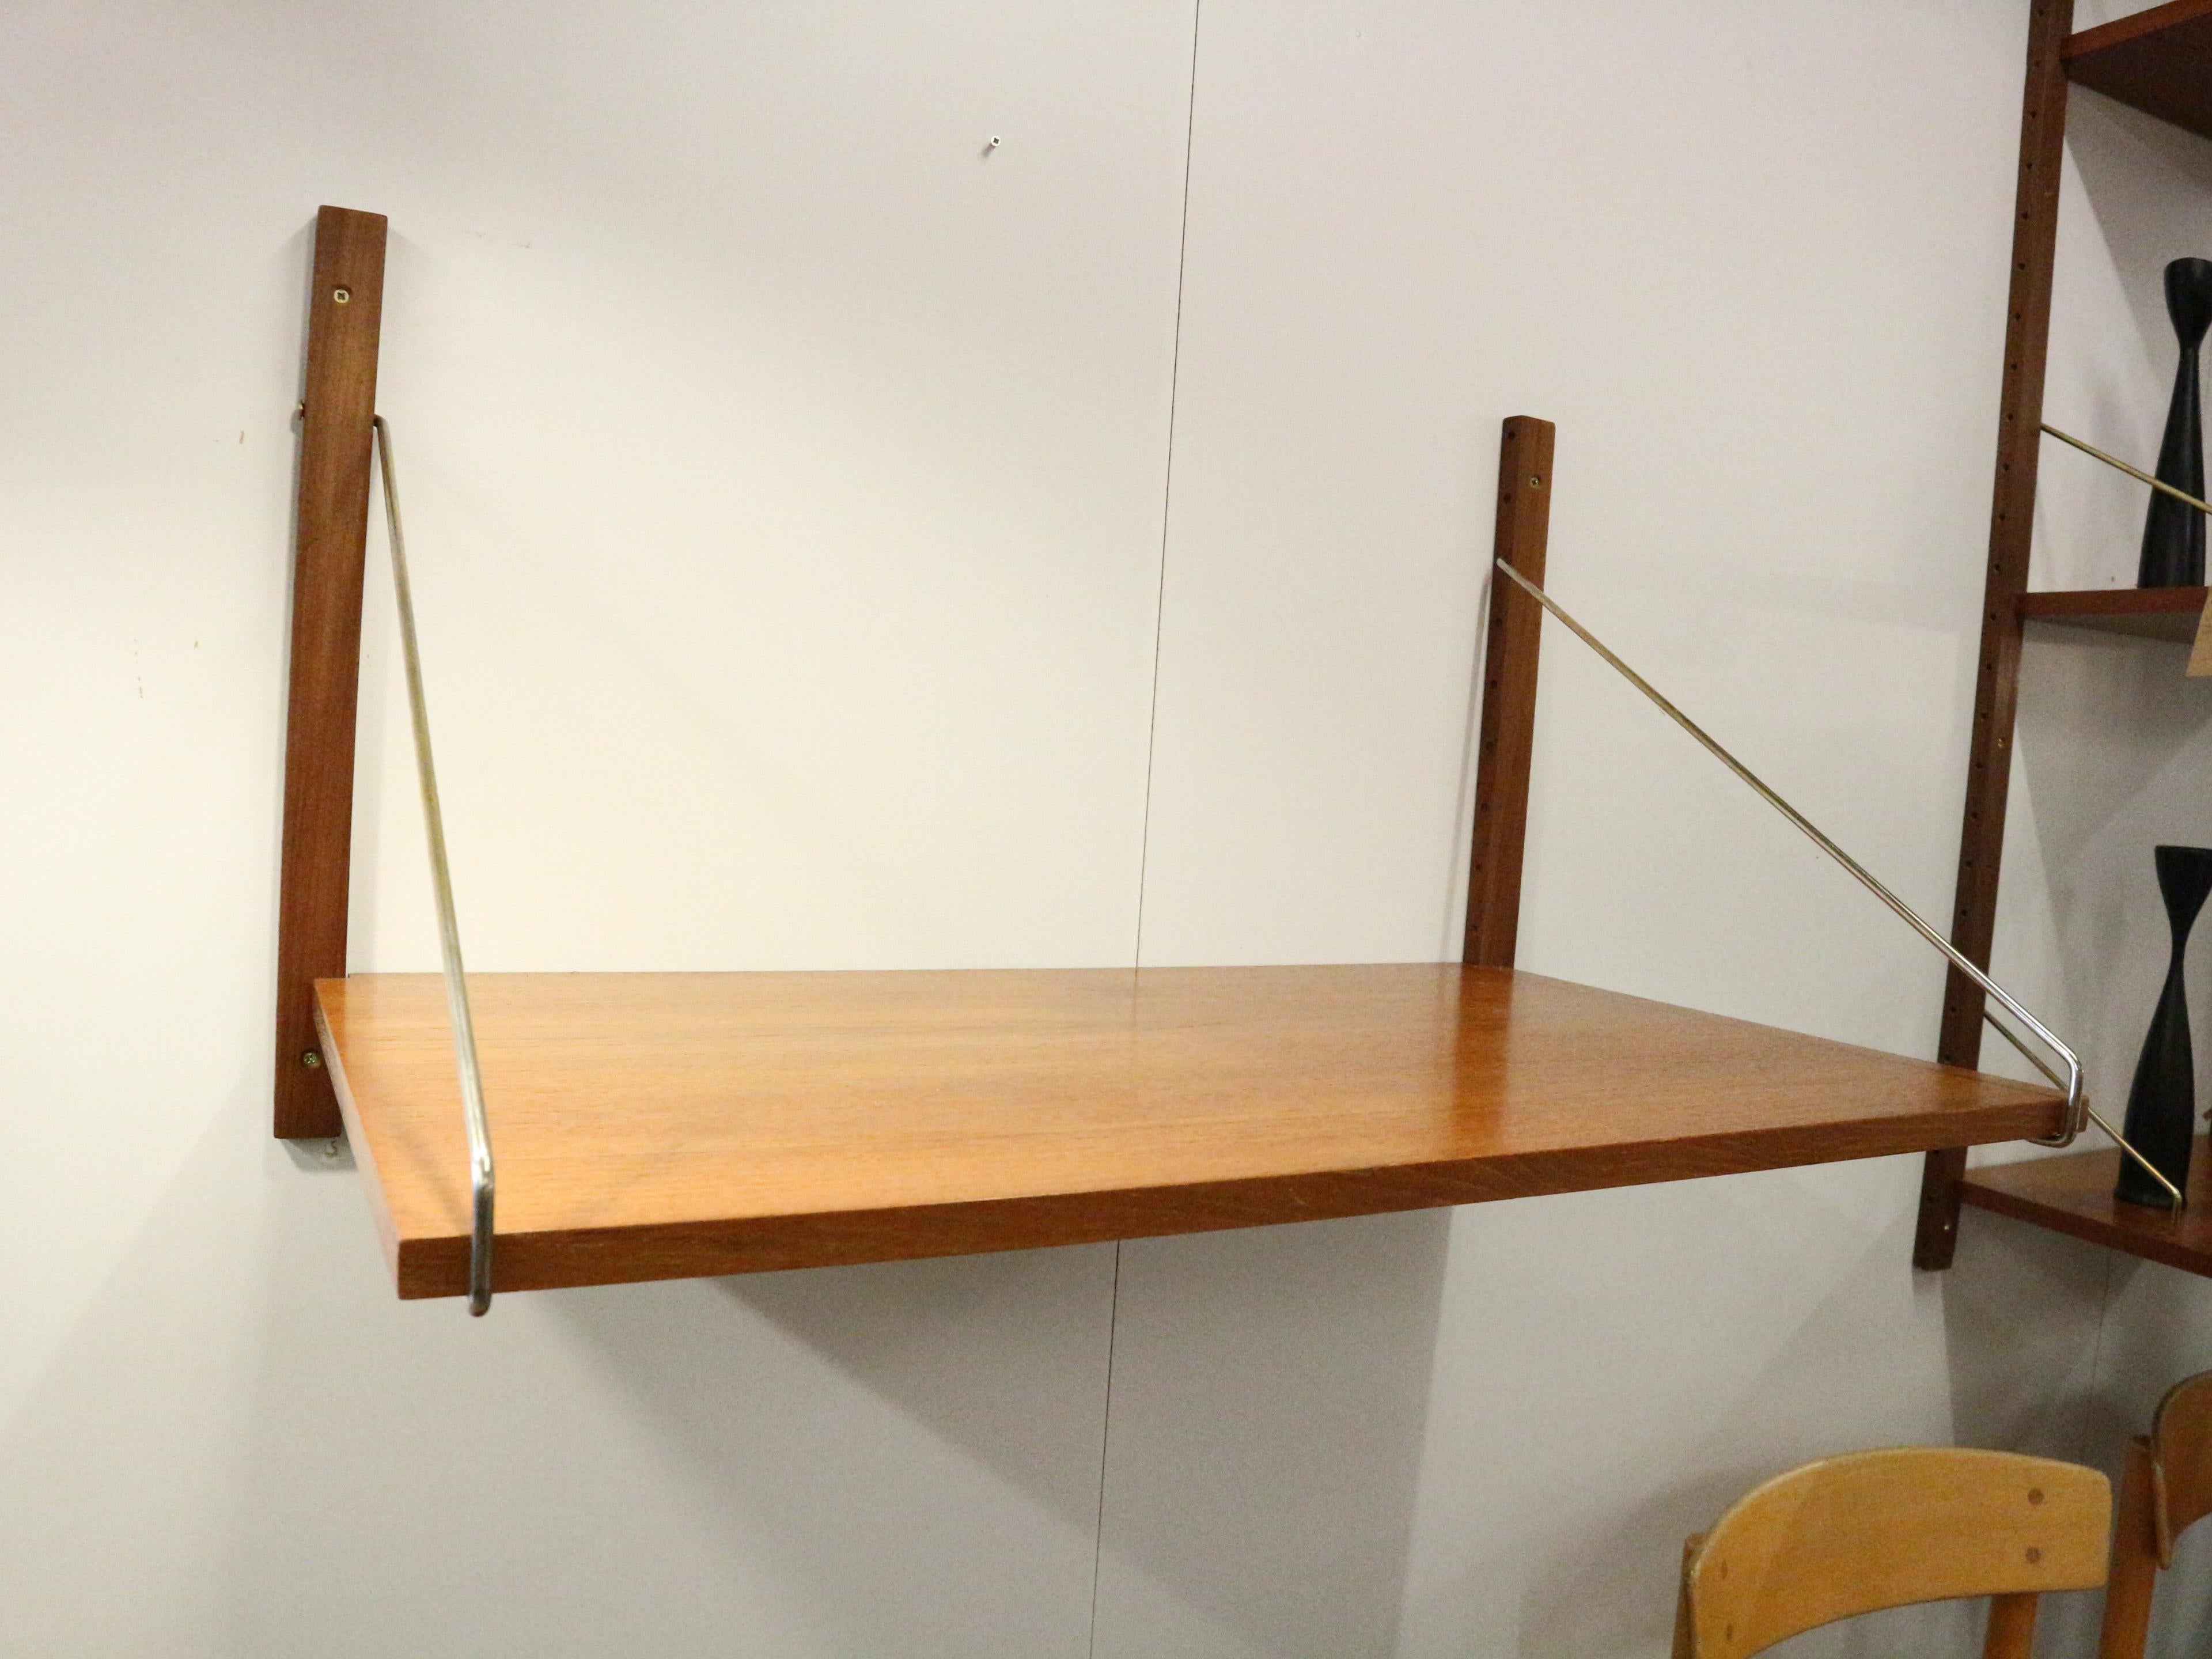 Scandinavian Modern Poul Cadovius 'Royal System' teak desk shelf and brass brackets, 1960s Denmark For Sale